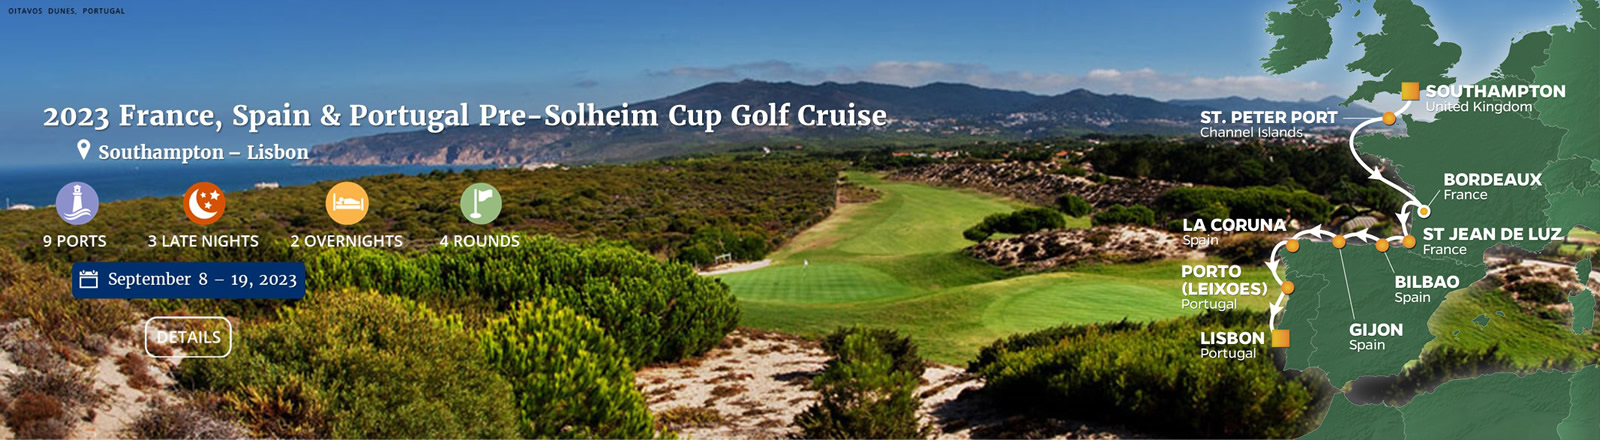 2023 France, Spain & Portugal Pre-Solheim Cup Golf Cruise